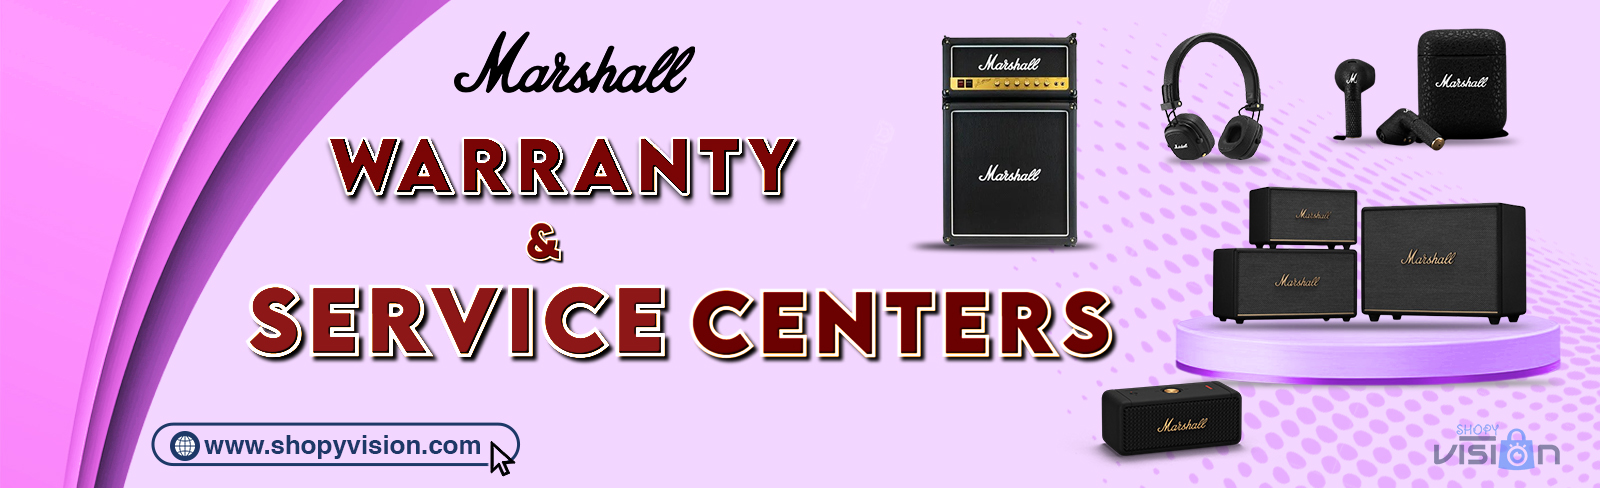 Marshall Warranty & Service Centers Desktop Banner